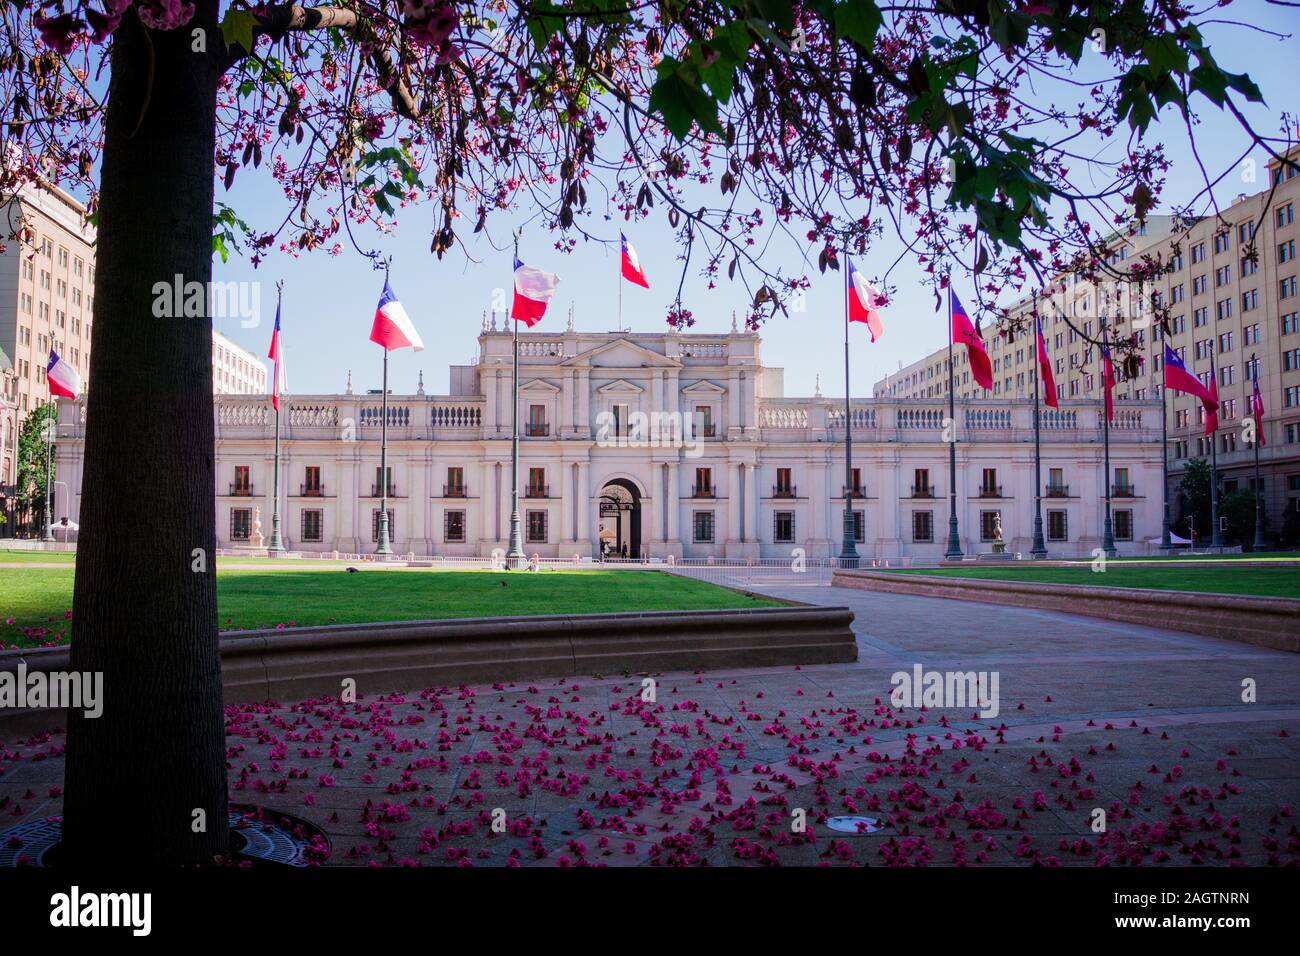 Plaza constitucion" located 1 block from the Palacio de la Moneda in Santiago de Chile Stock Photo